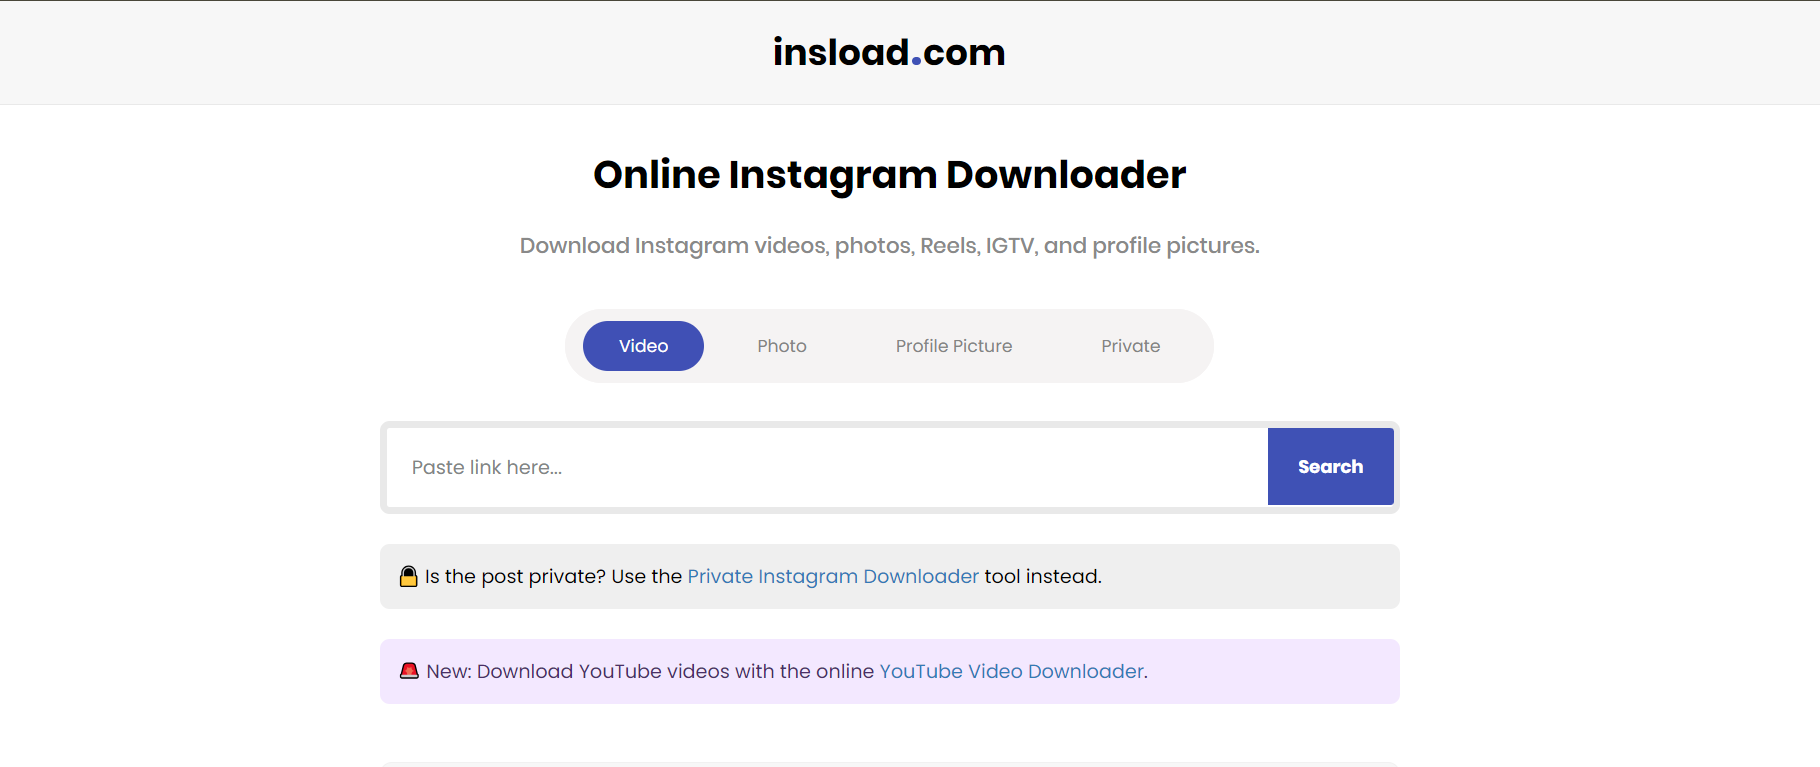 Download Instagram Video: Insload 